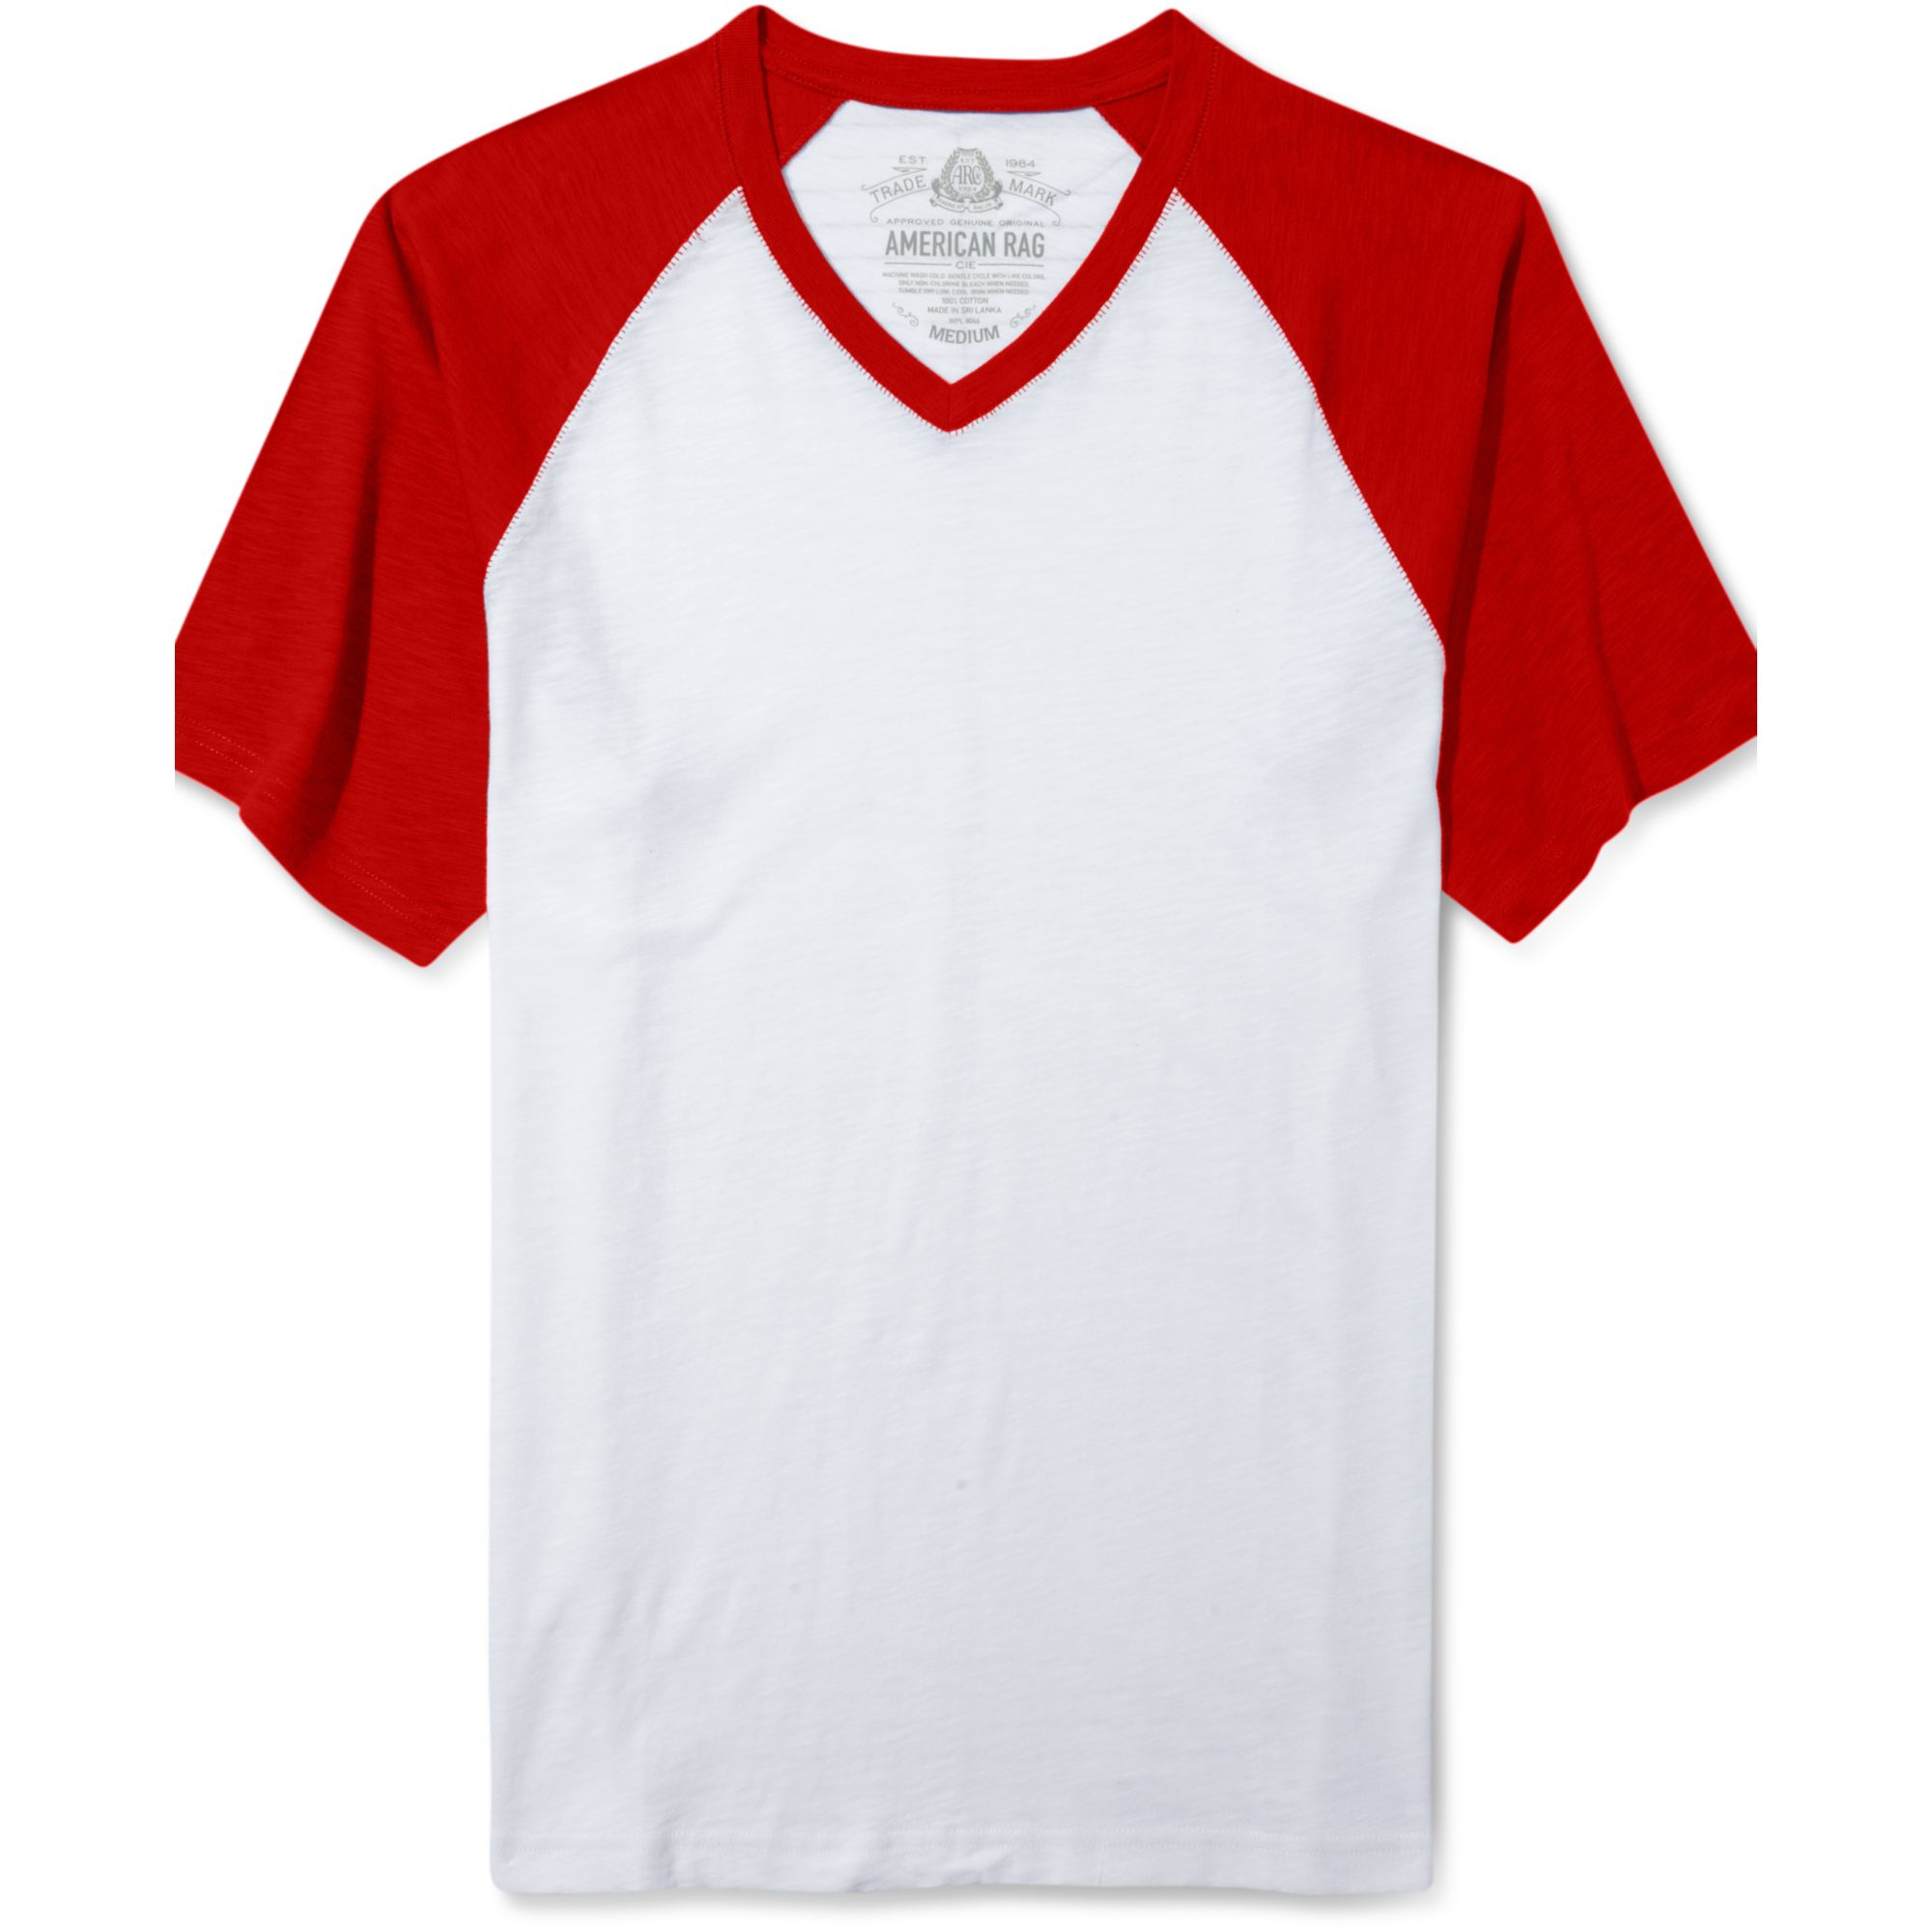 Download Lyst - American Rag Short Sleeve Baseball Raglan T Shirt ...